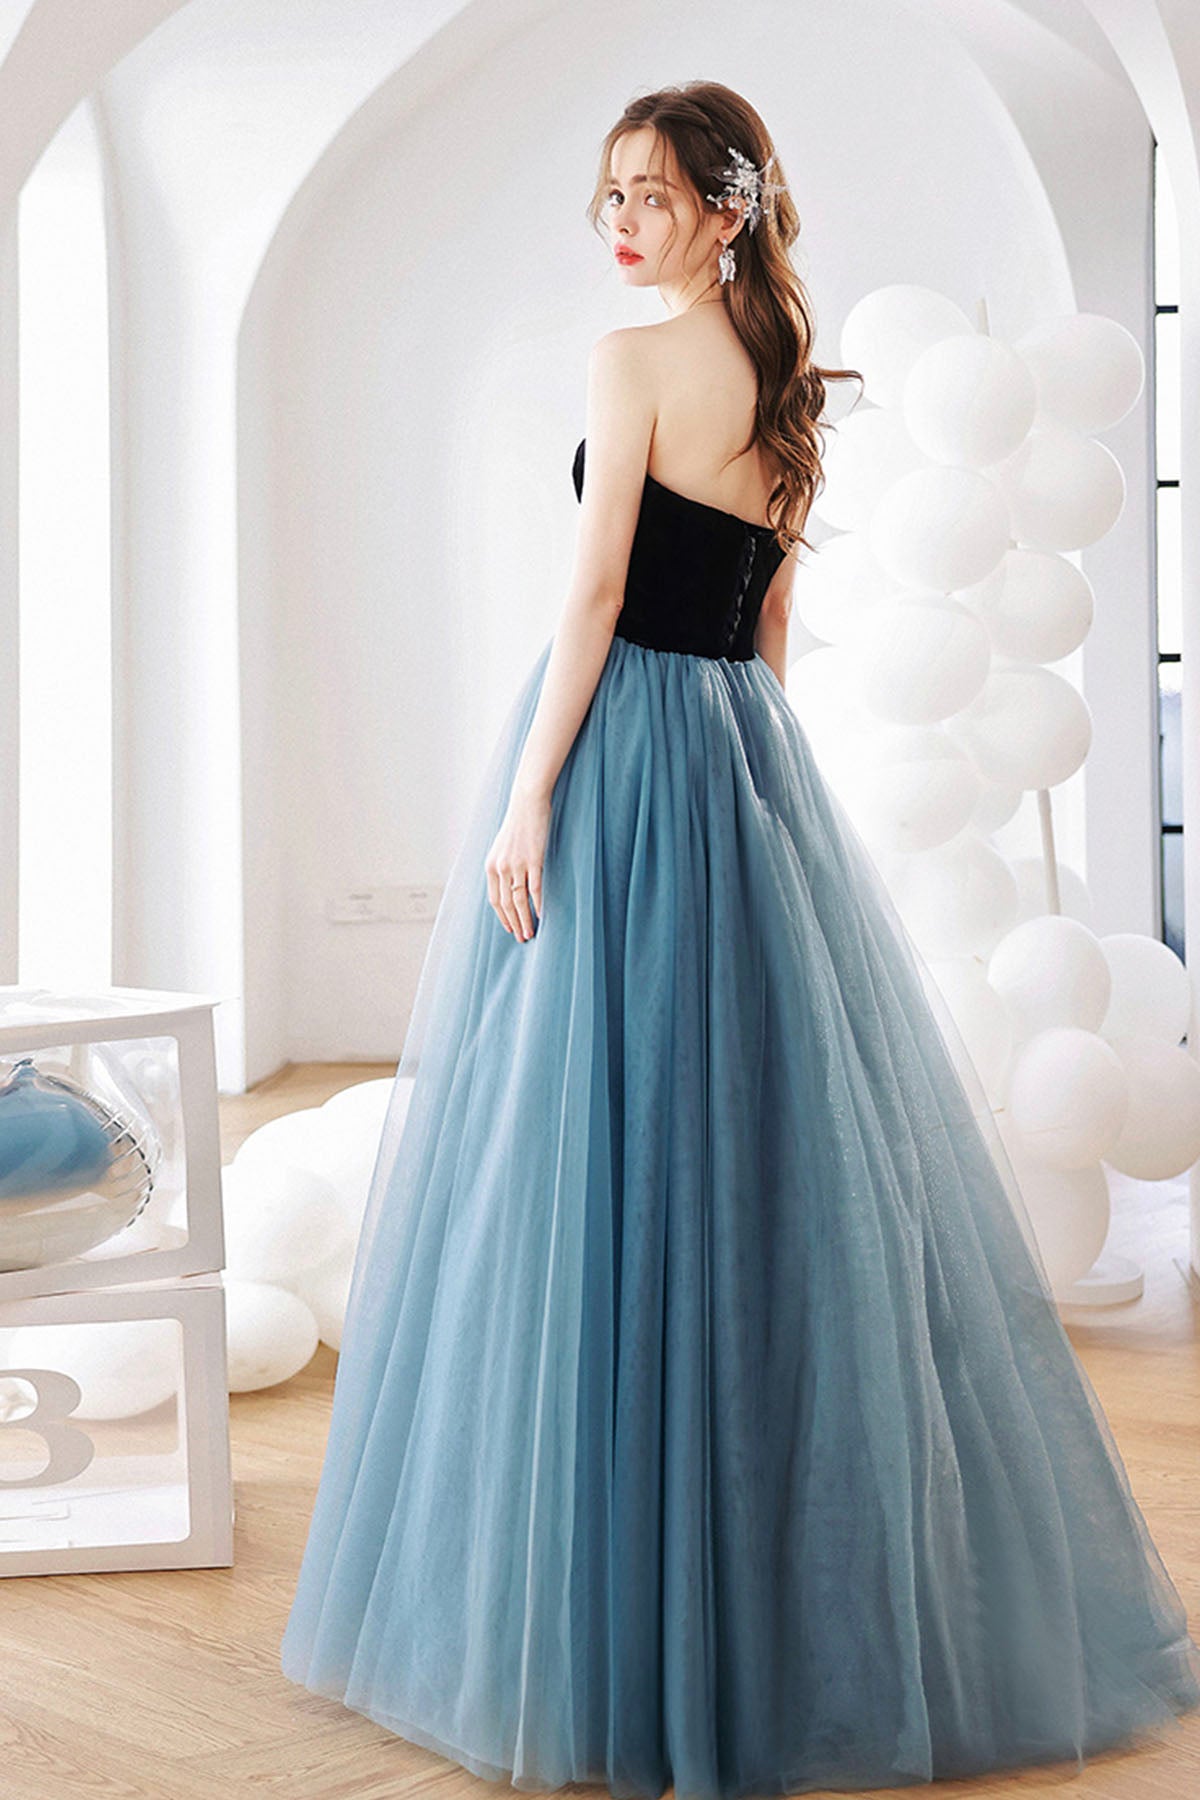 Blue Strapless Tulle Long Prom Dress, Blue A-Line Graduation Dress